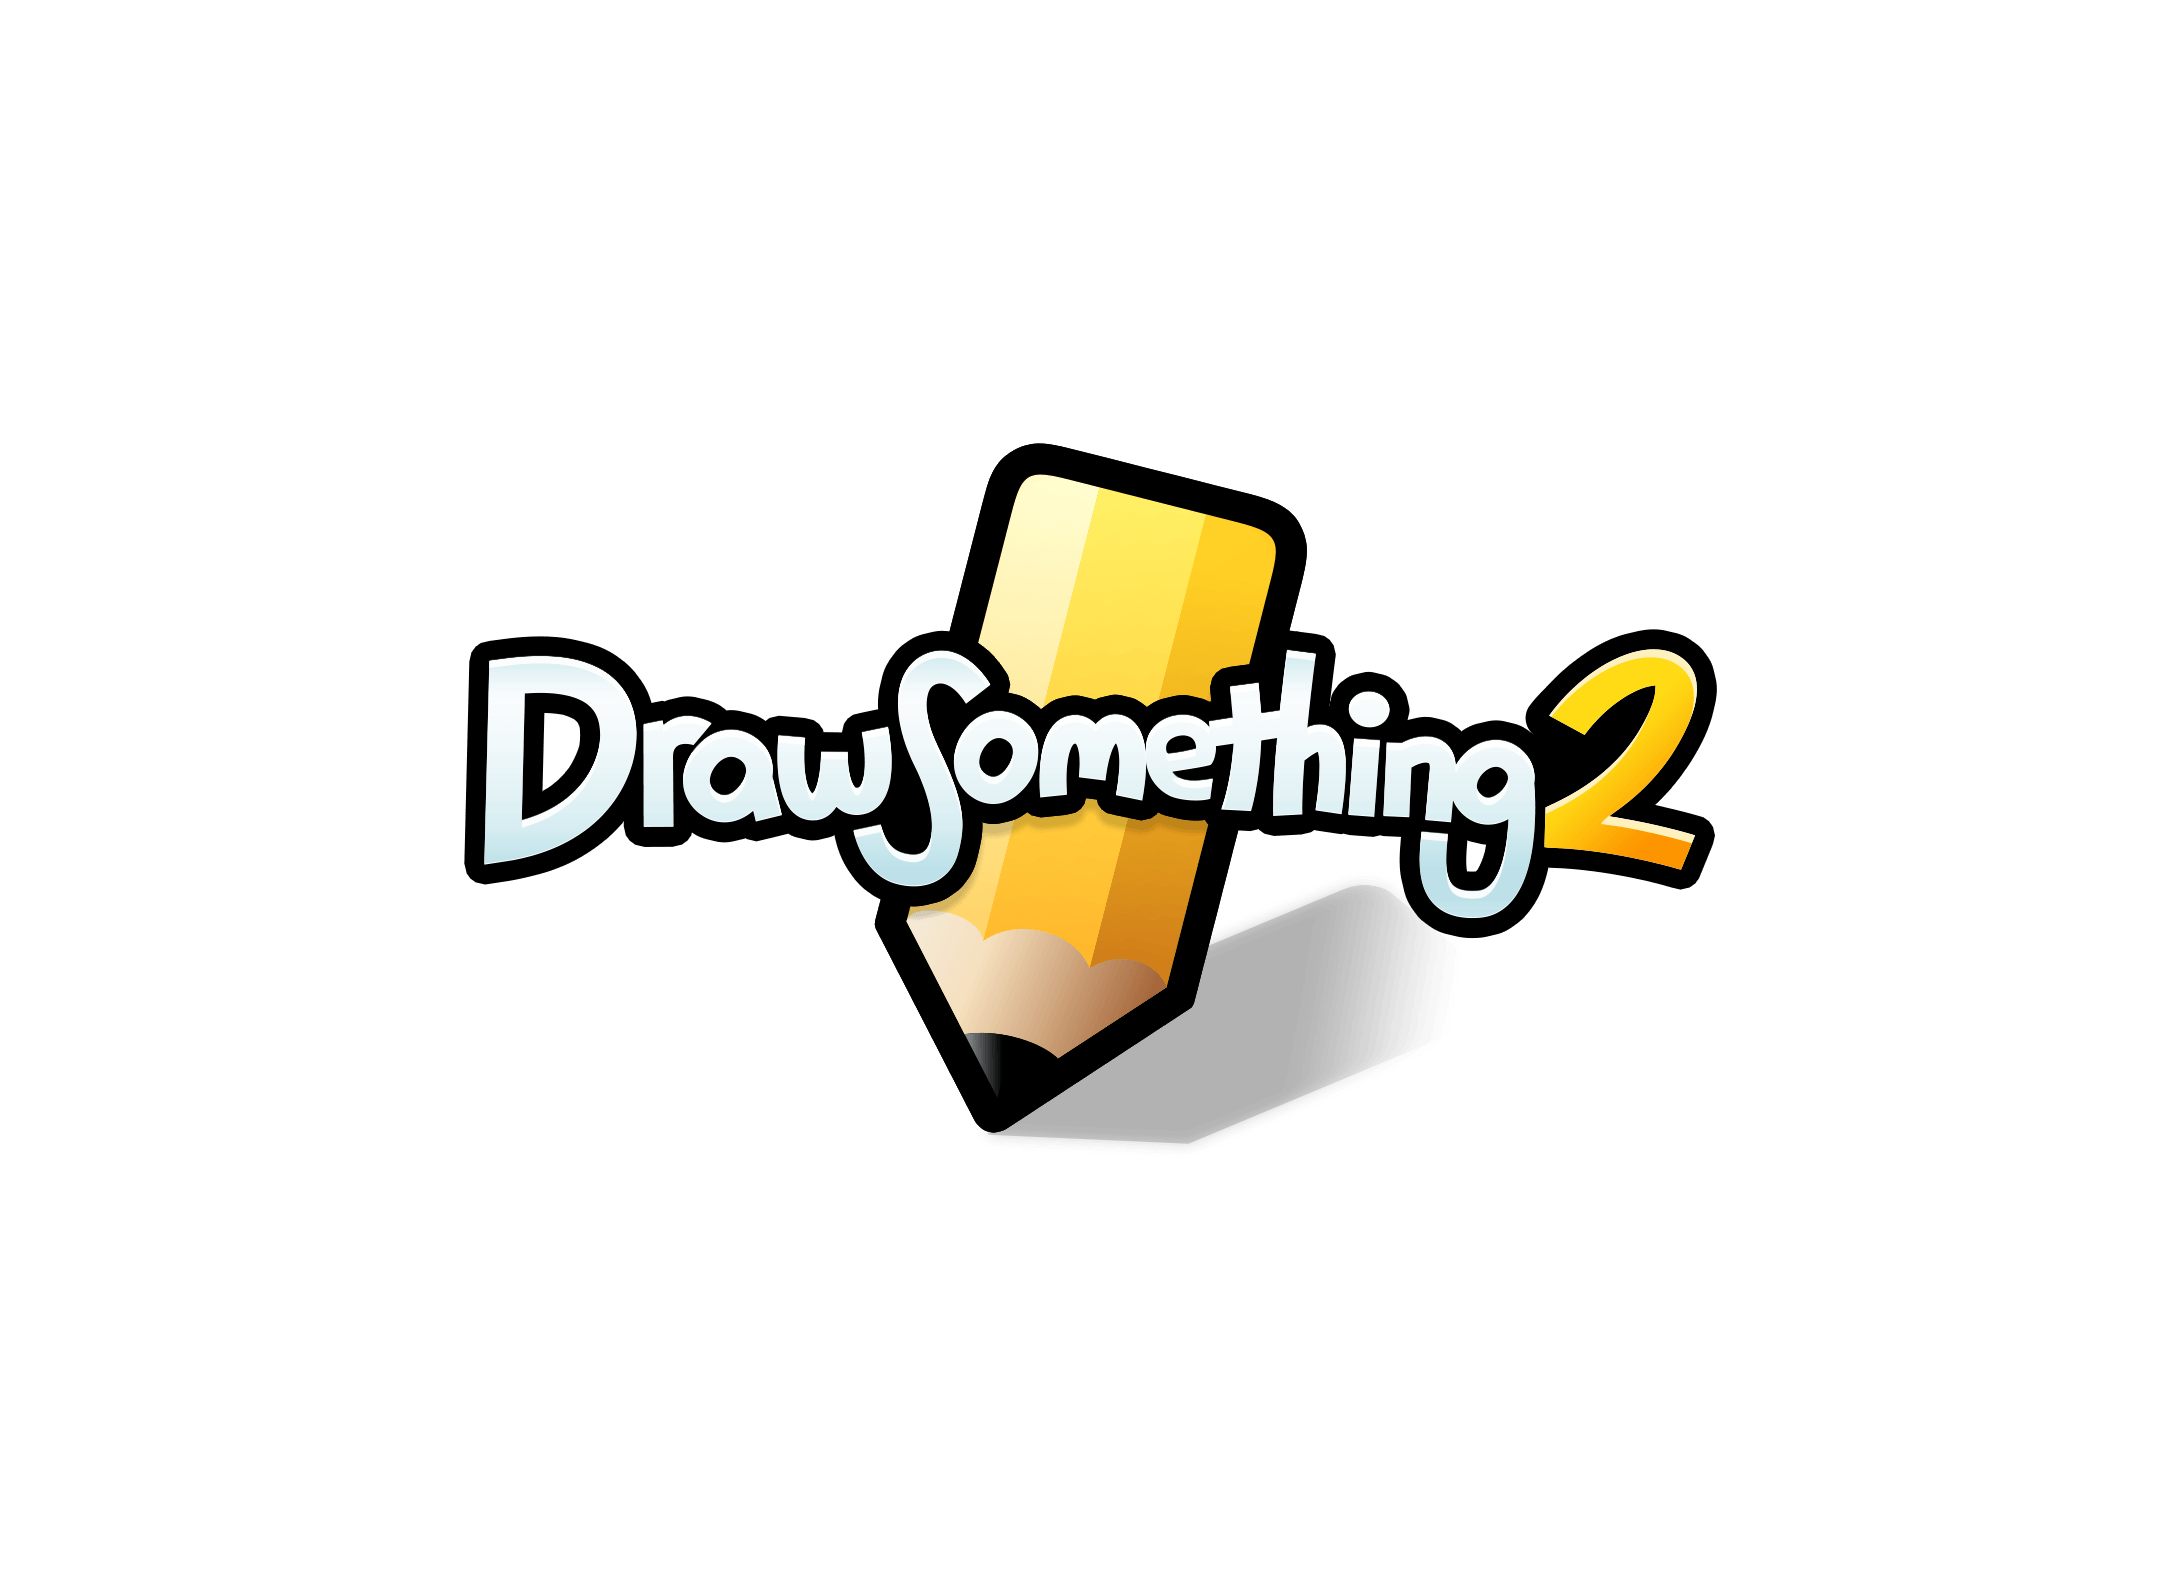 New Zynga Logo - Draw Something 2 Logo | Zynga Company Blog